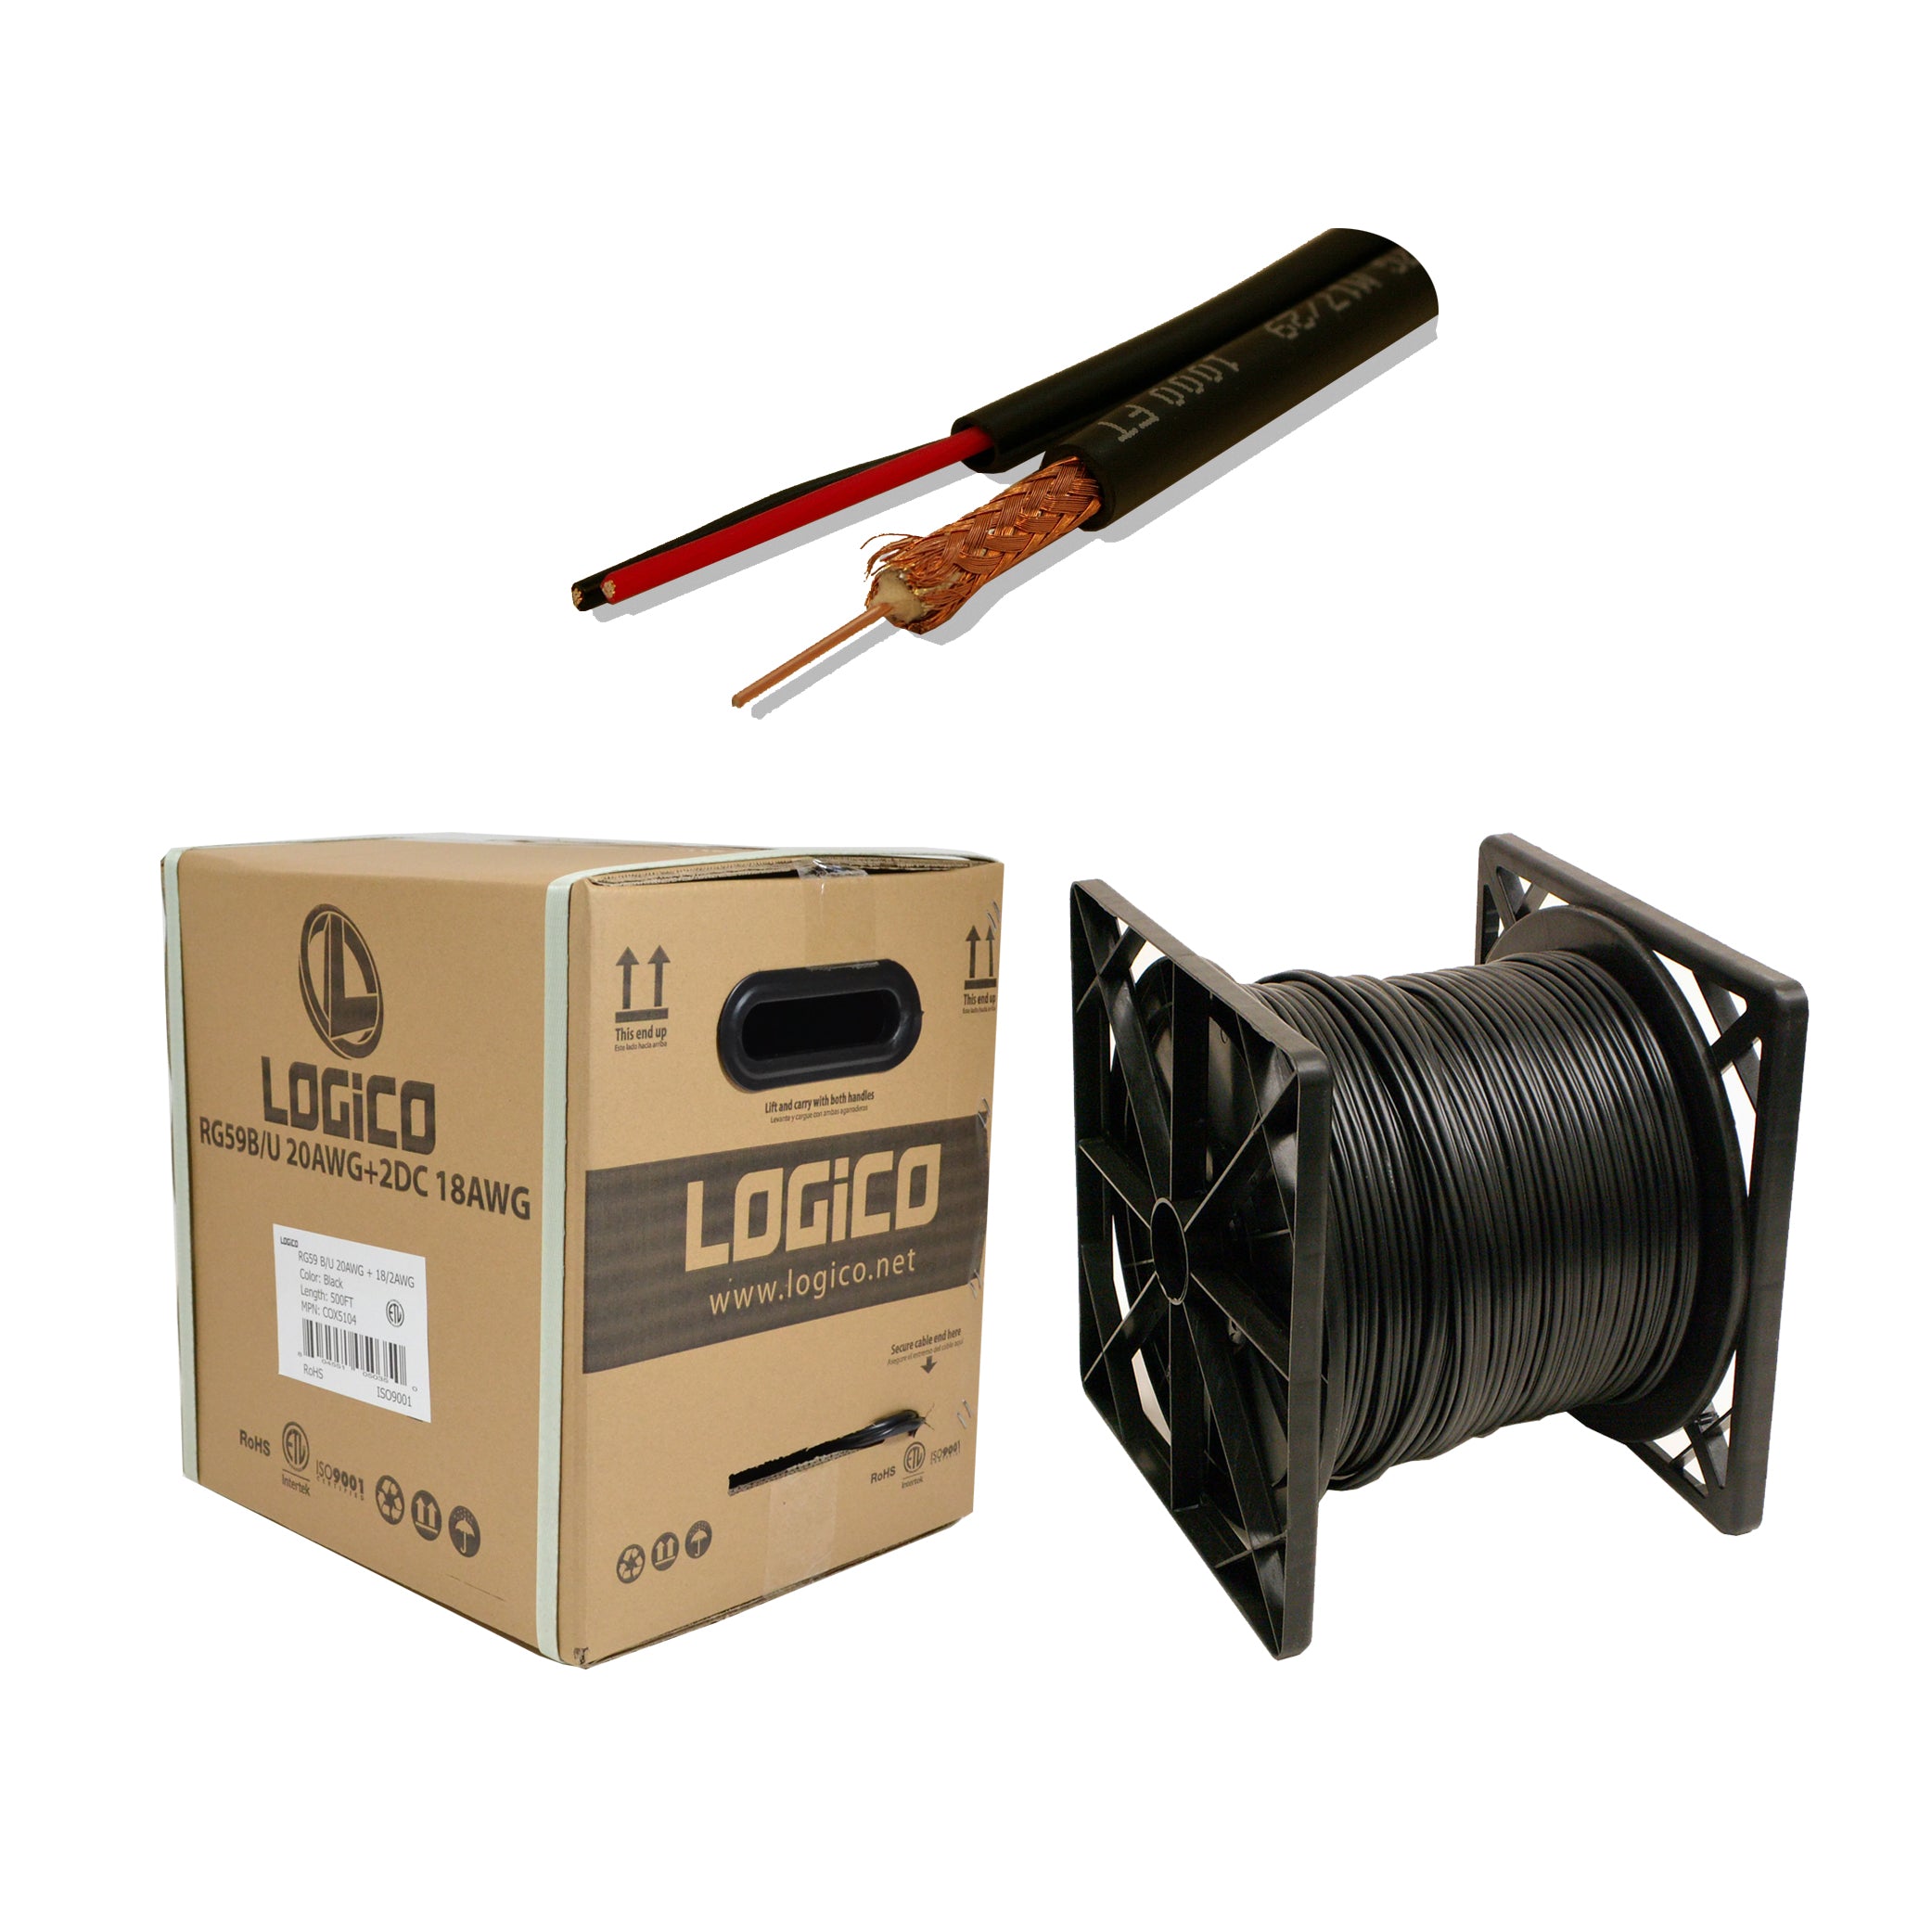 Cable Coaxial RG59 S + Alimentación Dual 0,55mm² - Emelec Viascom